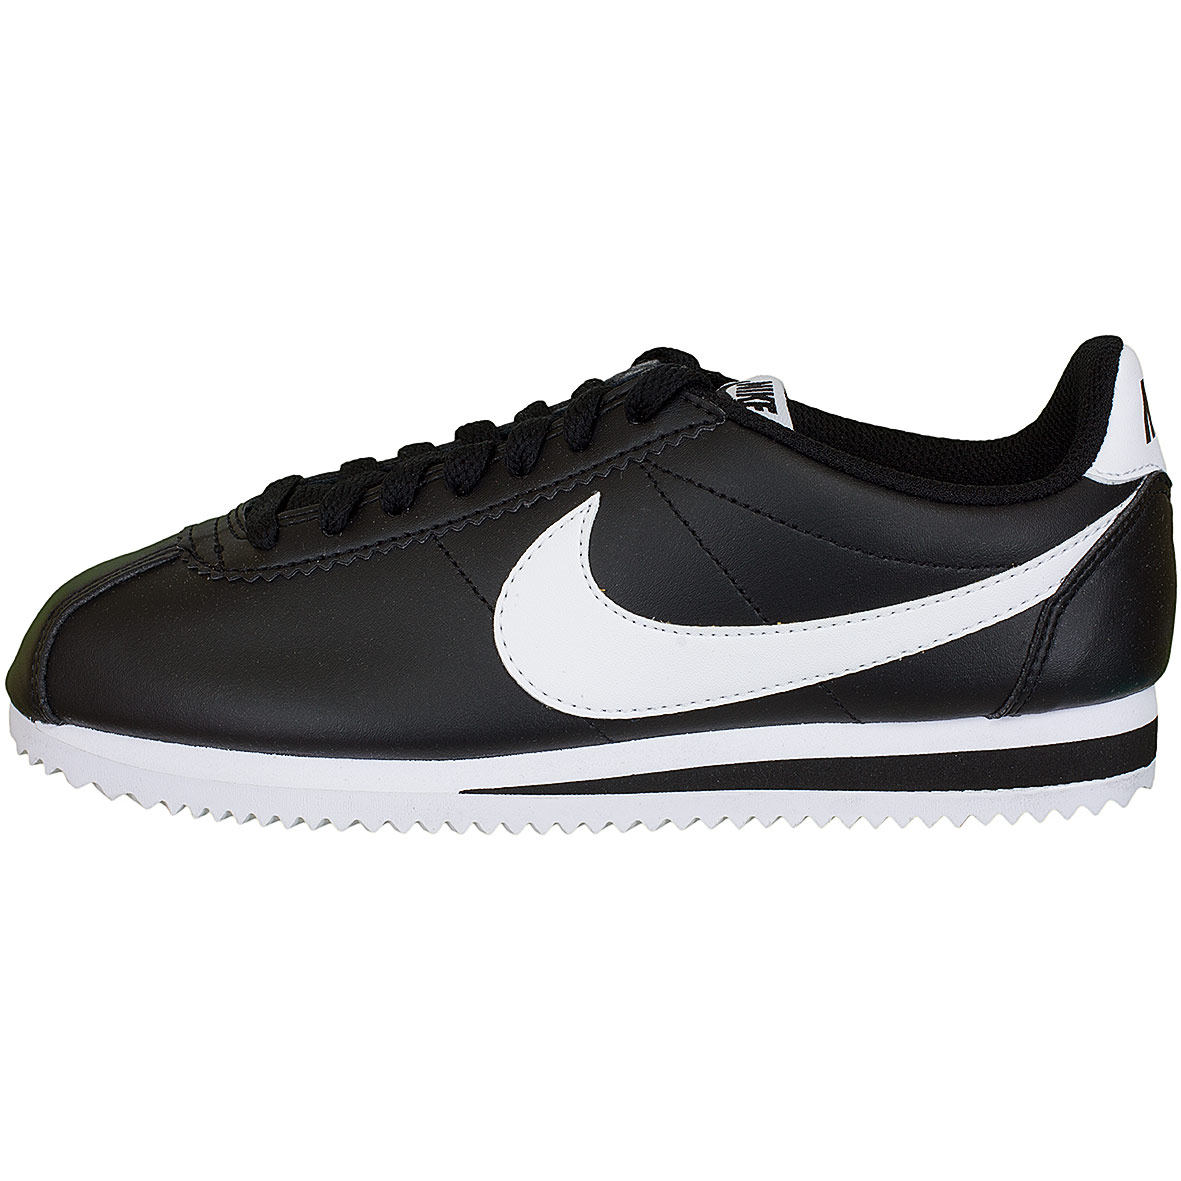 ☆ Nike Damen Sneaker Cortez Leather schwarz/weiß - hier bestellen!